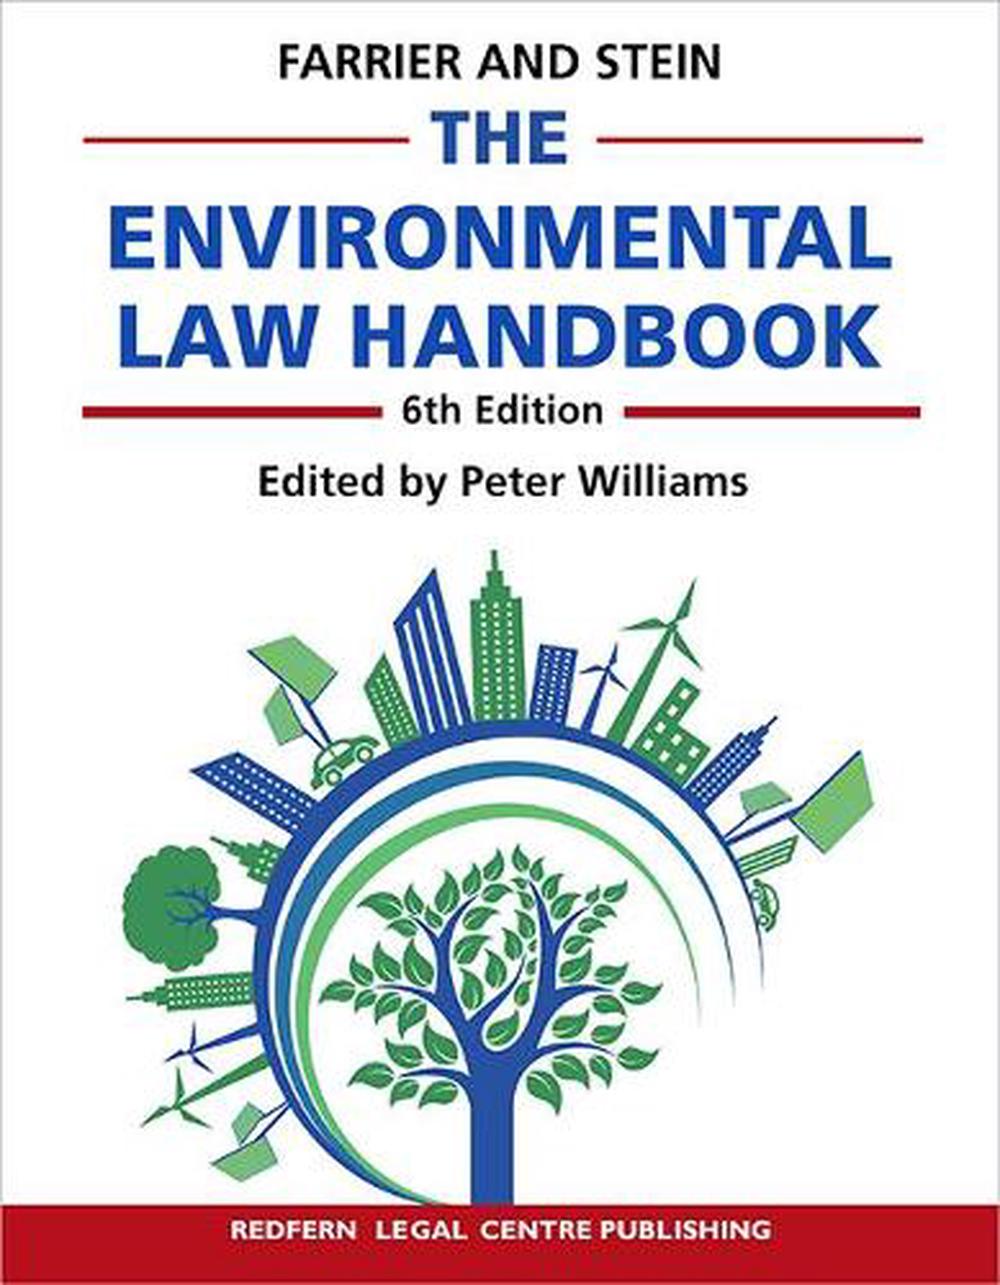 environmental law thesis topics